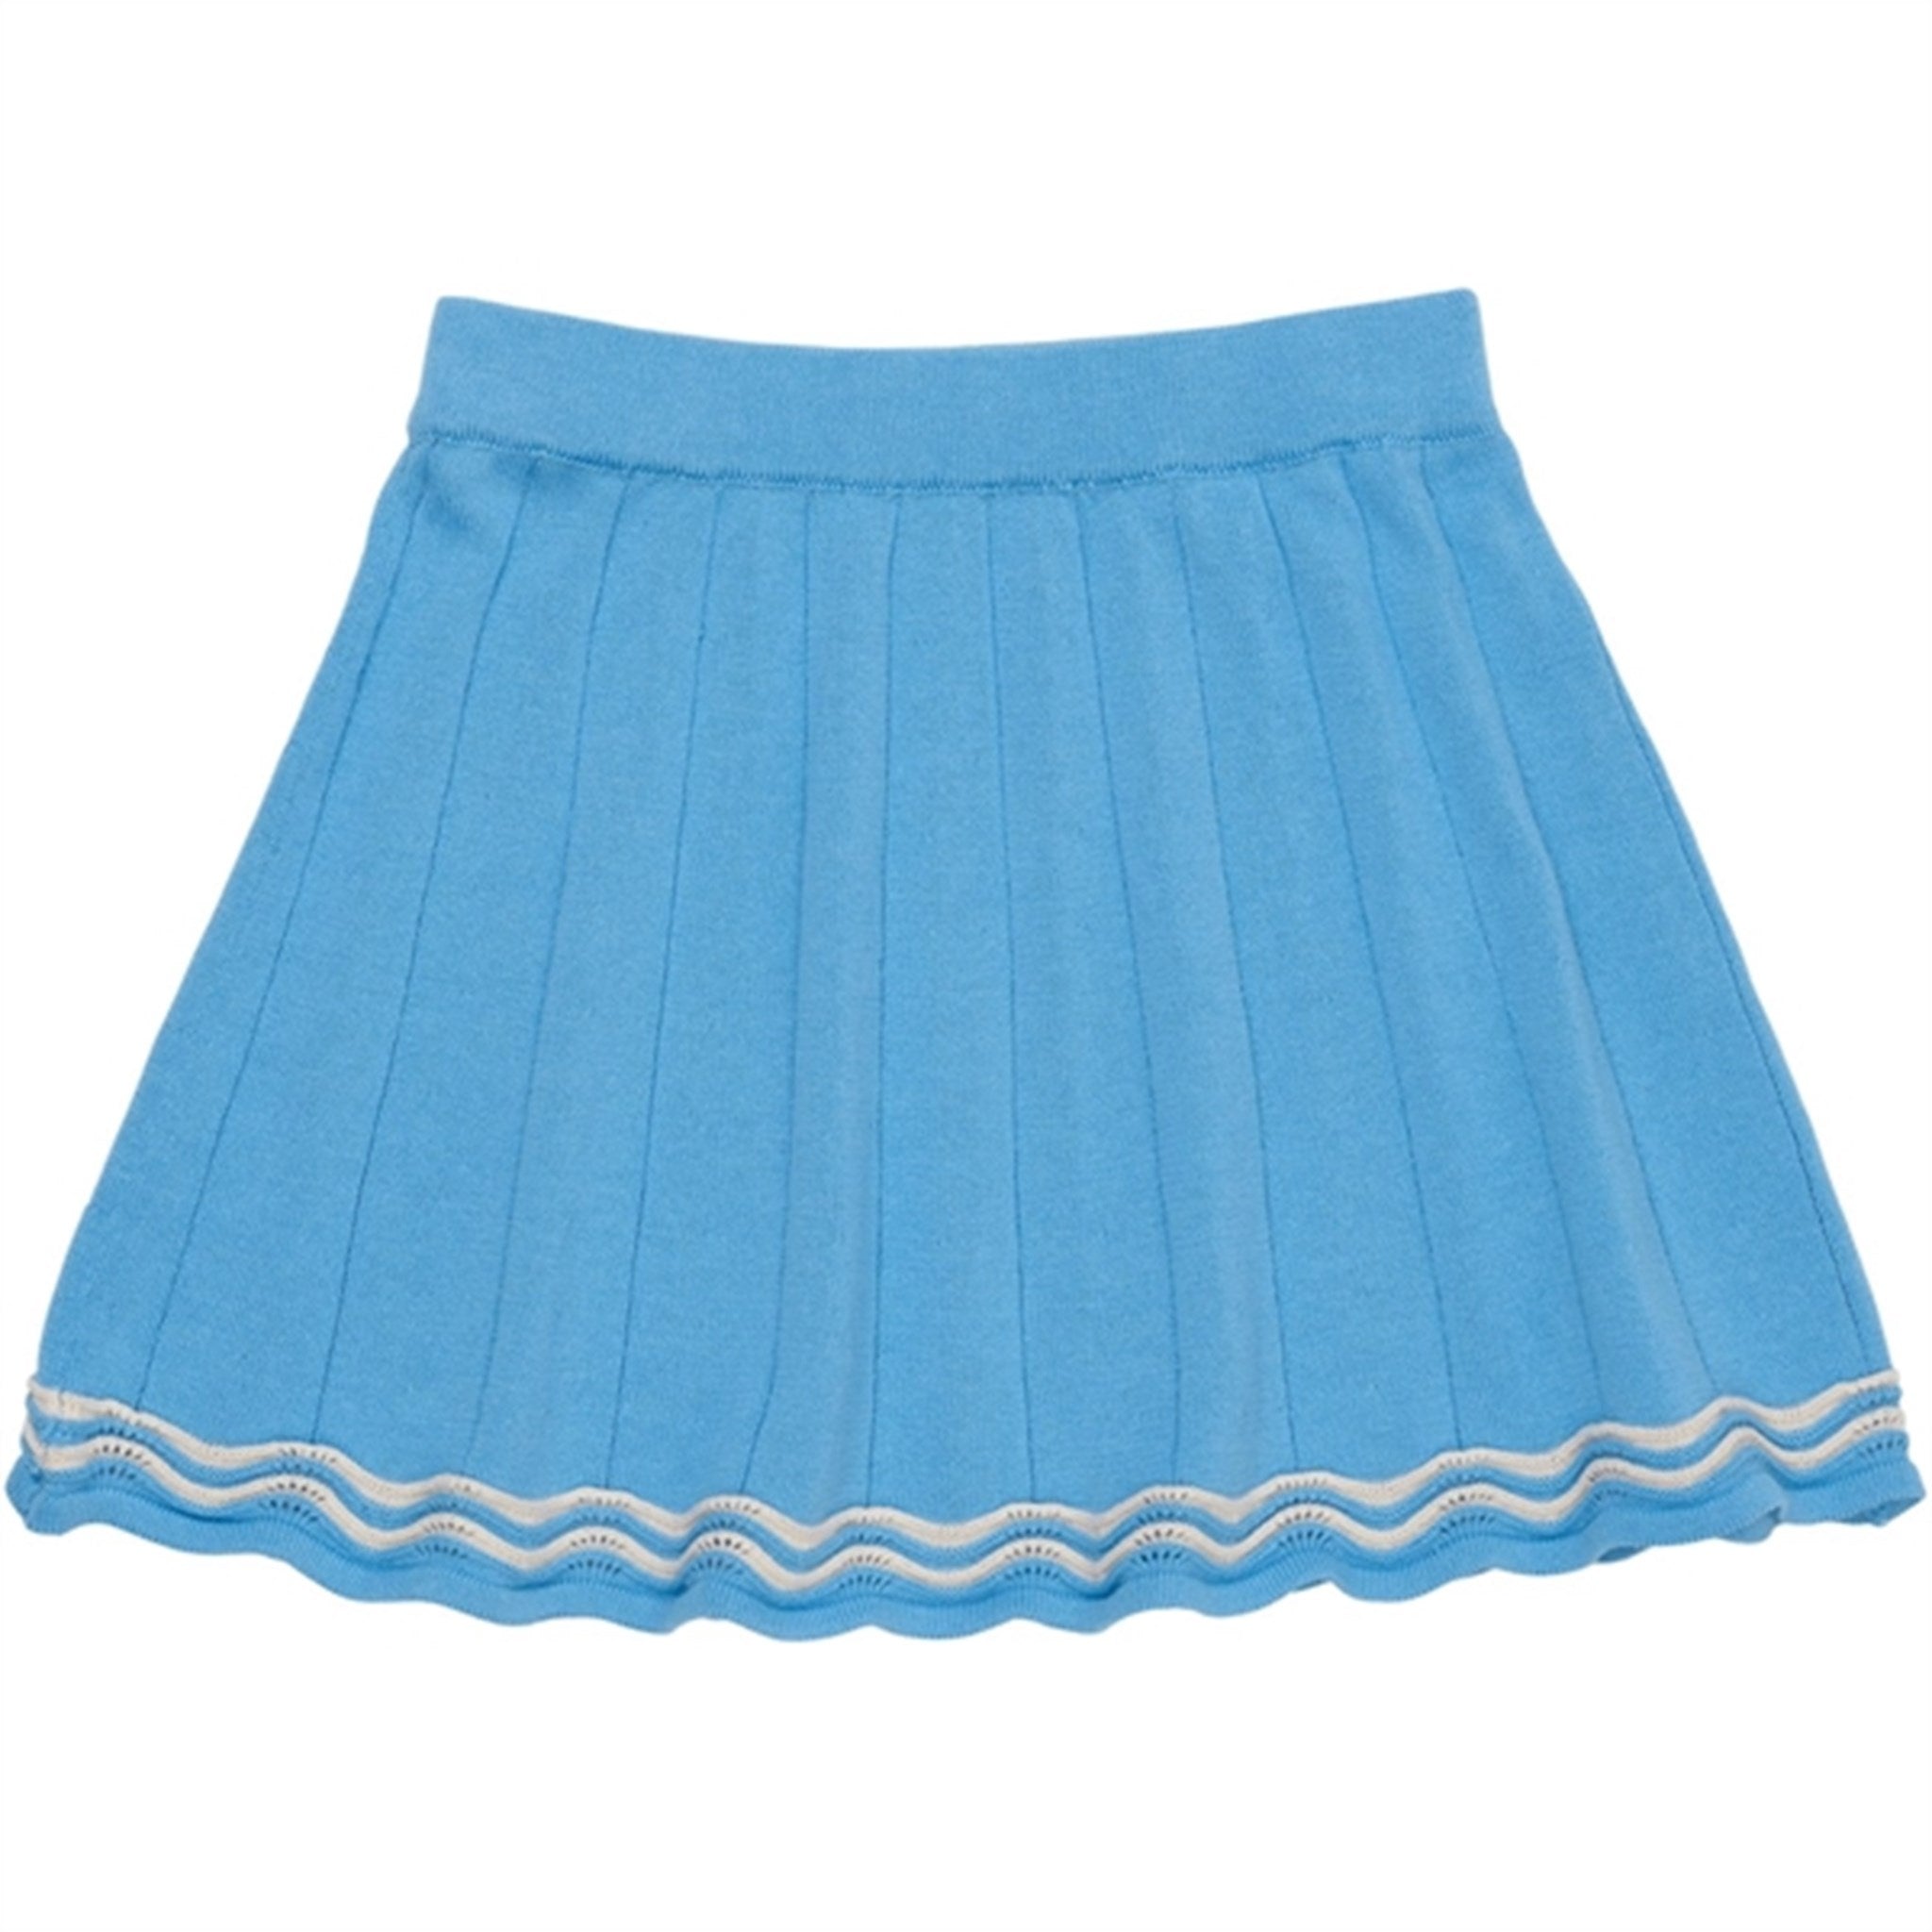 Copenhagen Colors Sky Blue/Cream Comb. Knit Tennis Skirt